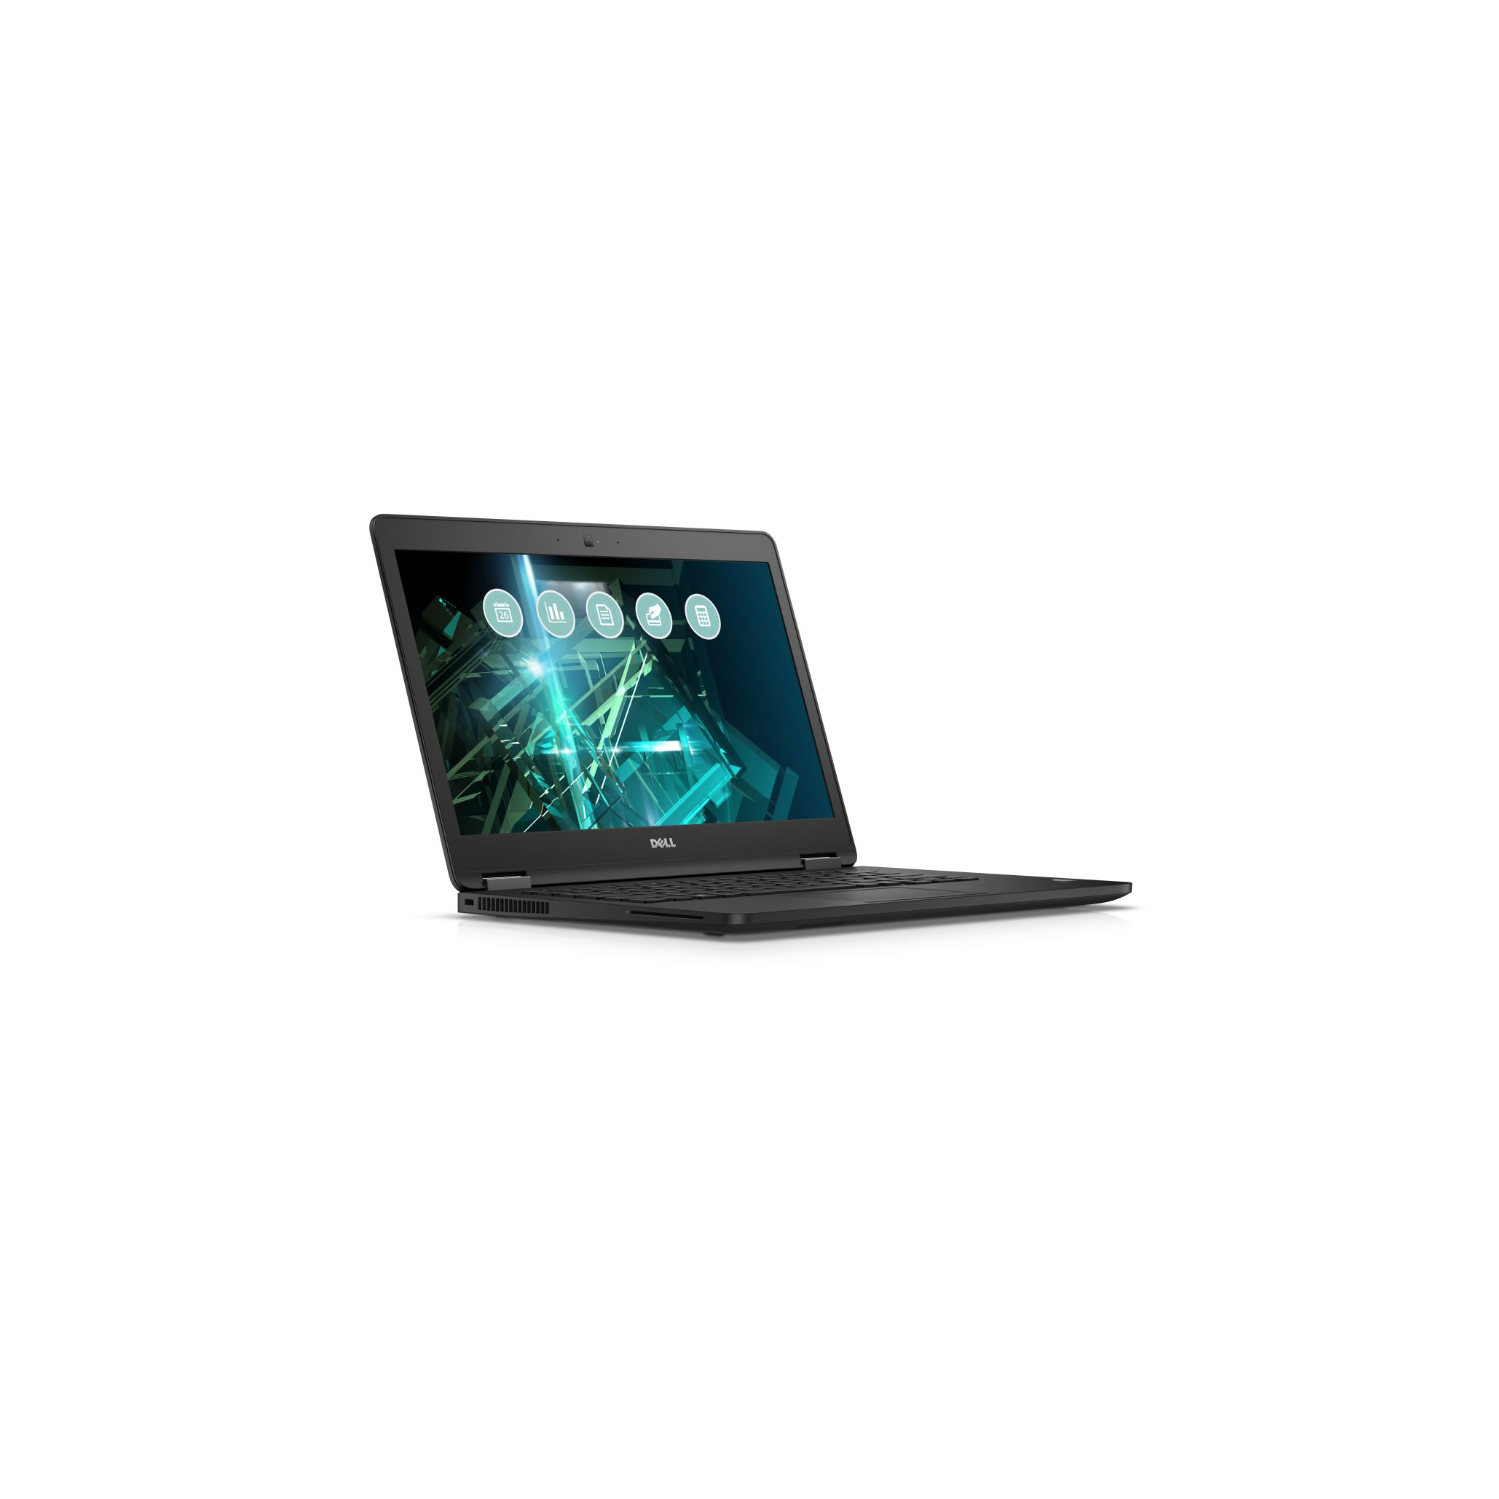 Refurbished (Good) - Dell Latitude 7470 Ultrabook Laptop, Intel Core i5-6300U, 2.4Ghz, 8GB RAM 256GB SSD, Windows 10 Pro